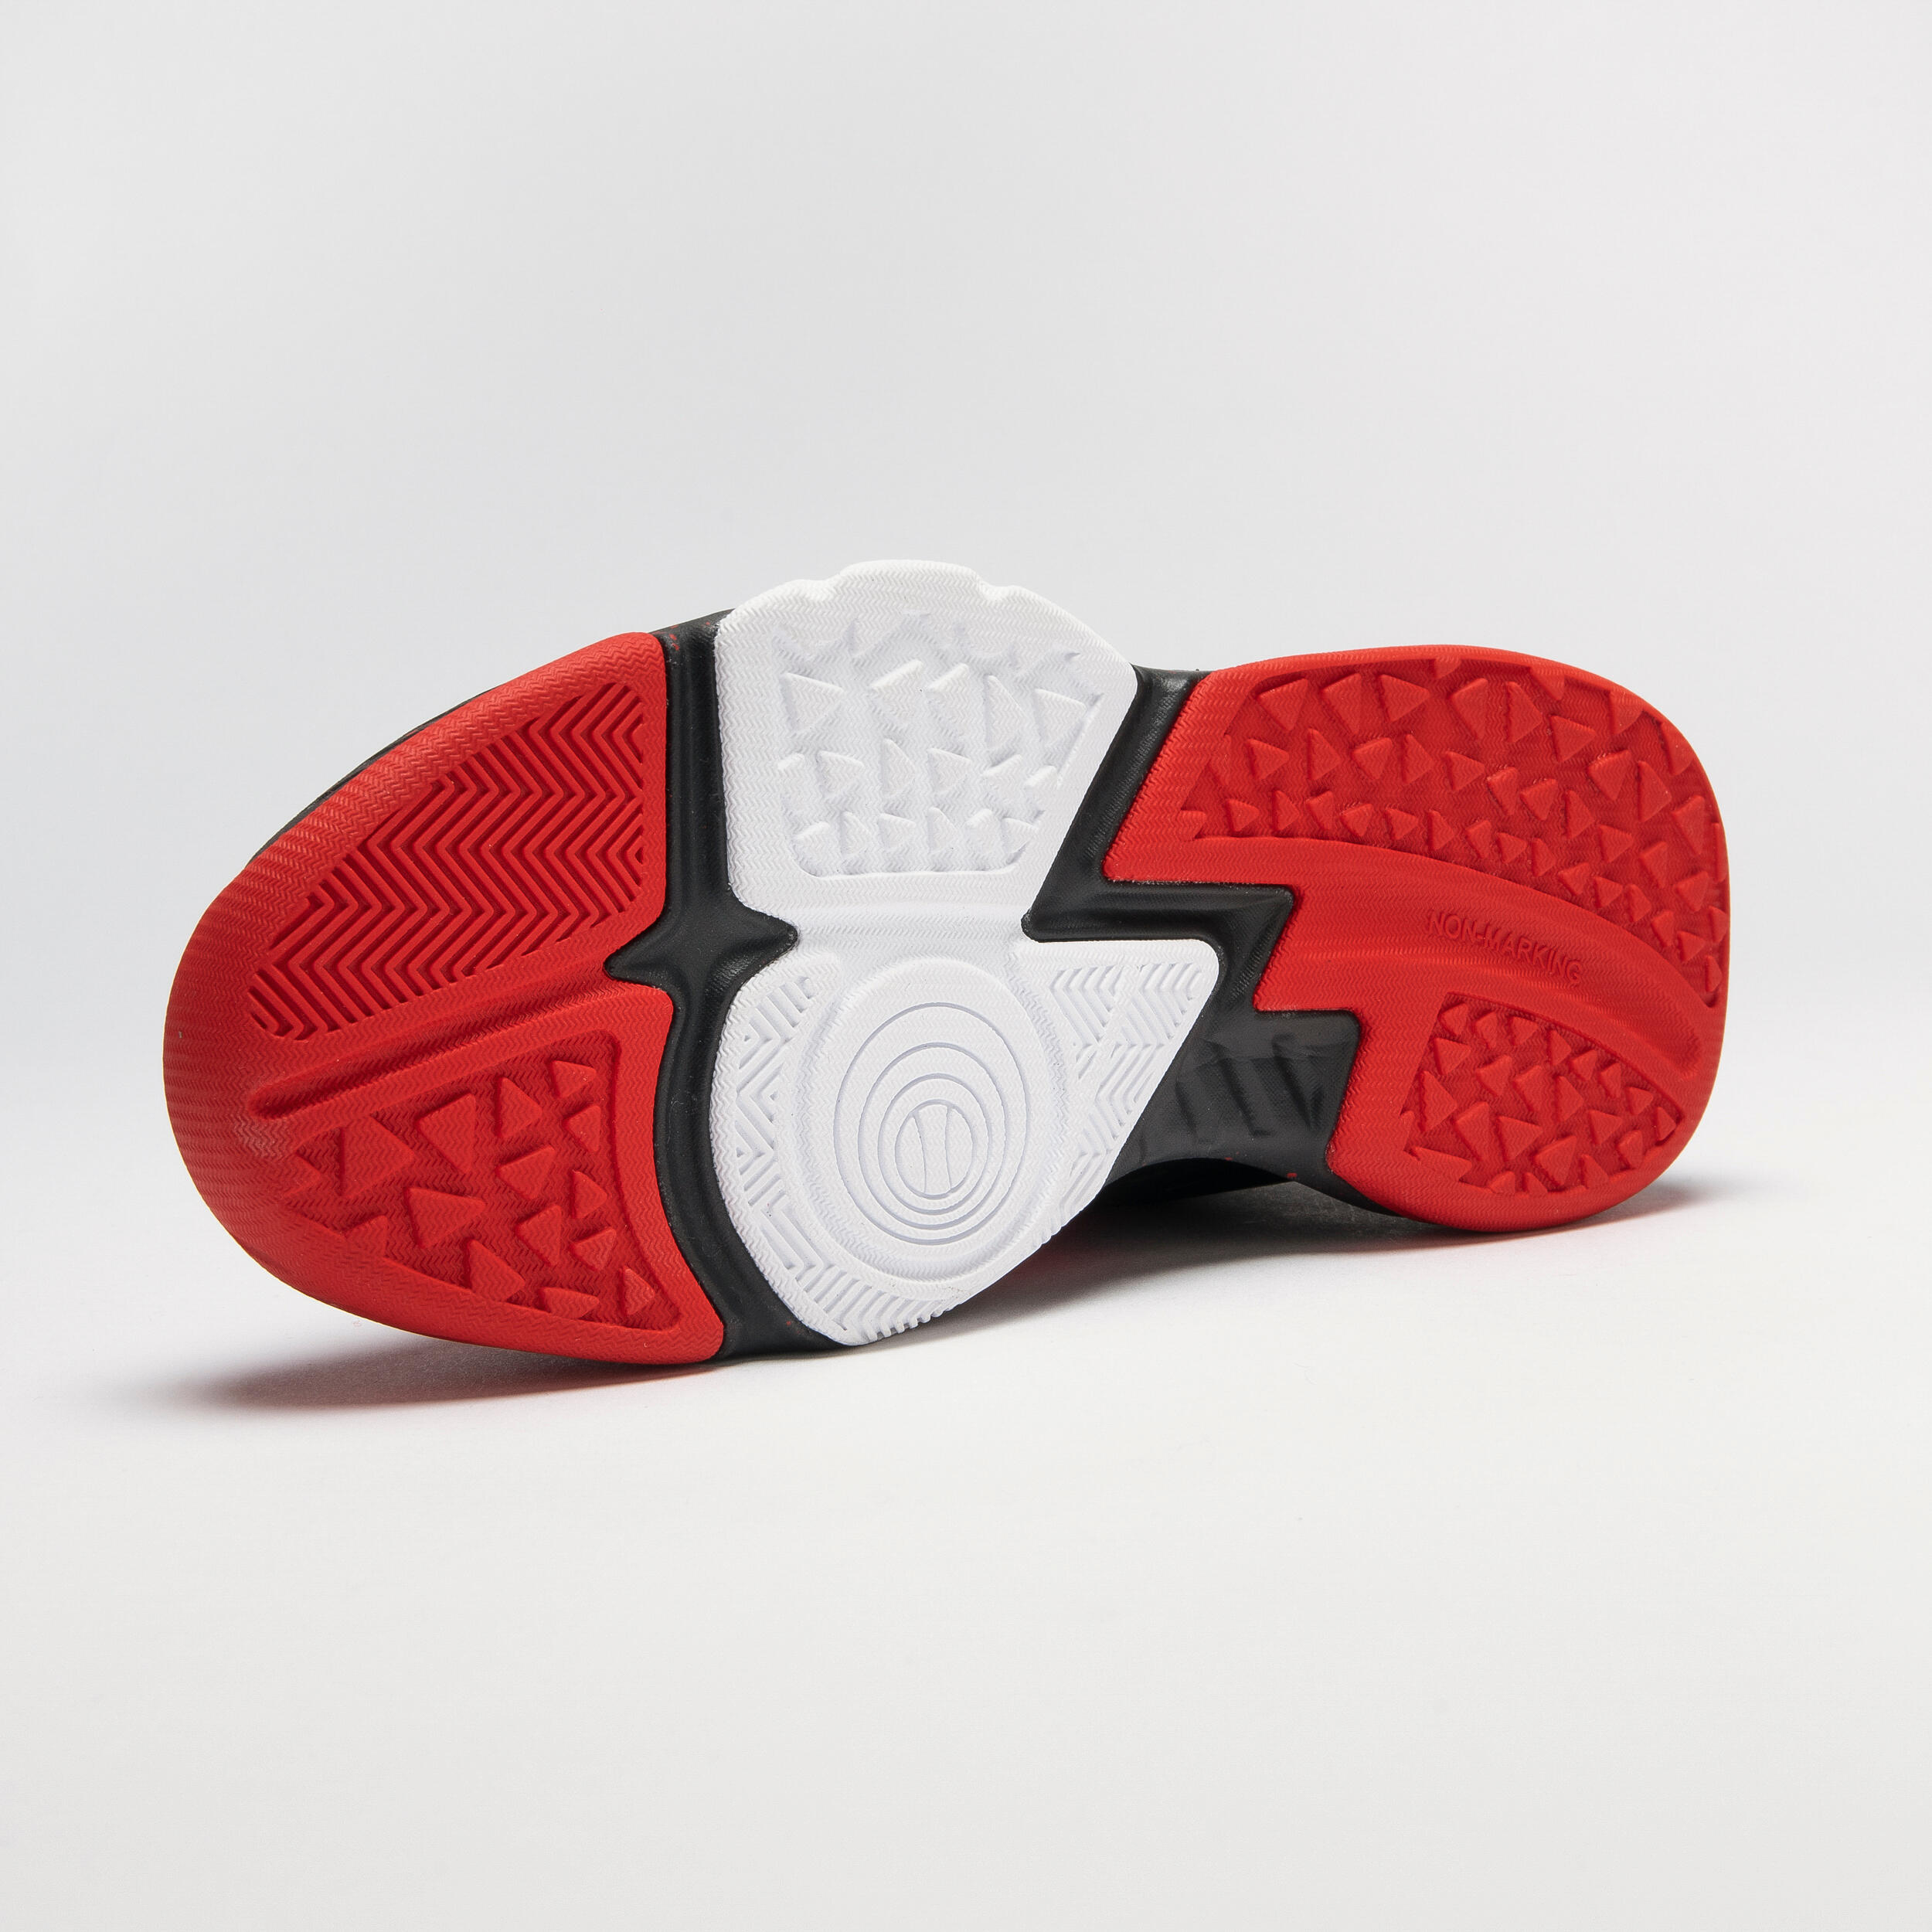 Chaussures de basketball enfant – SS 500 rouge - TARMAK